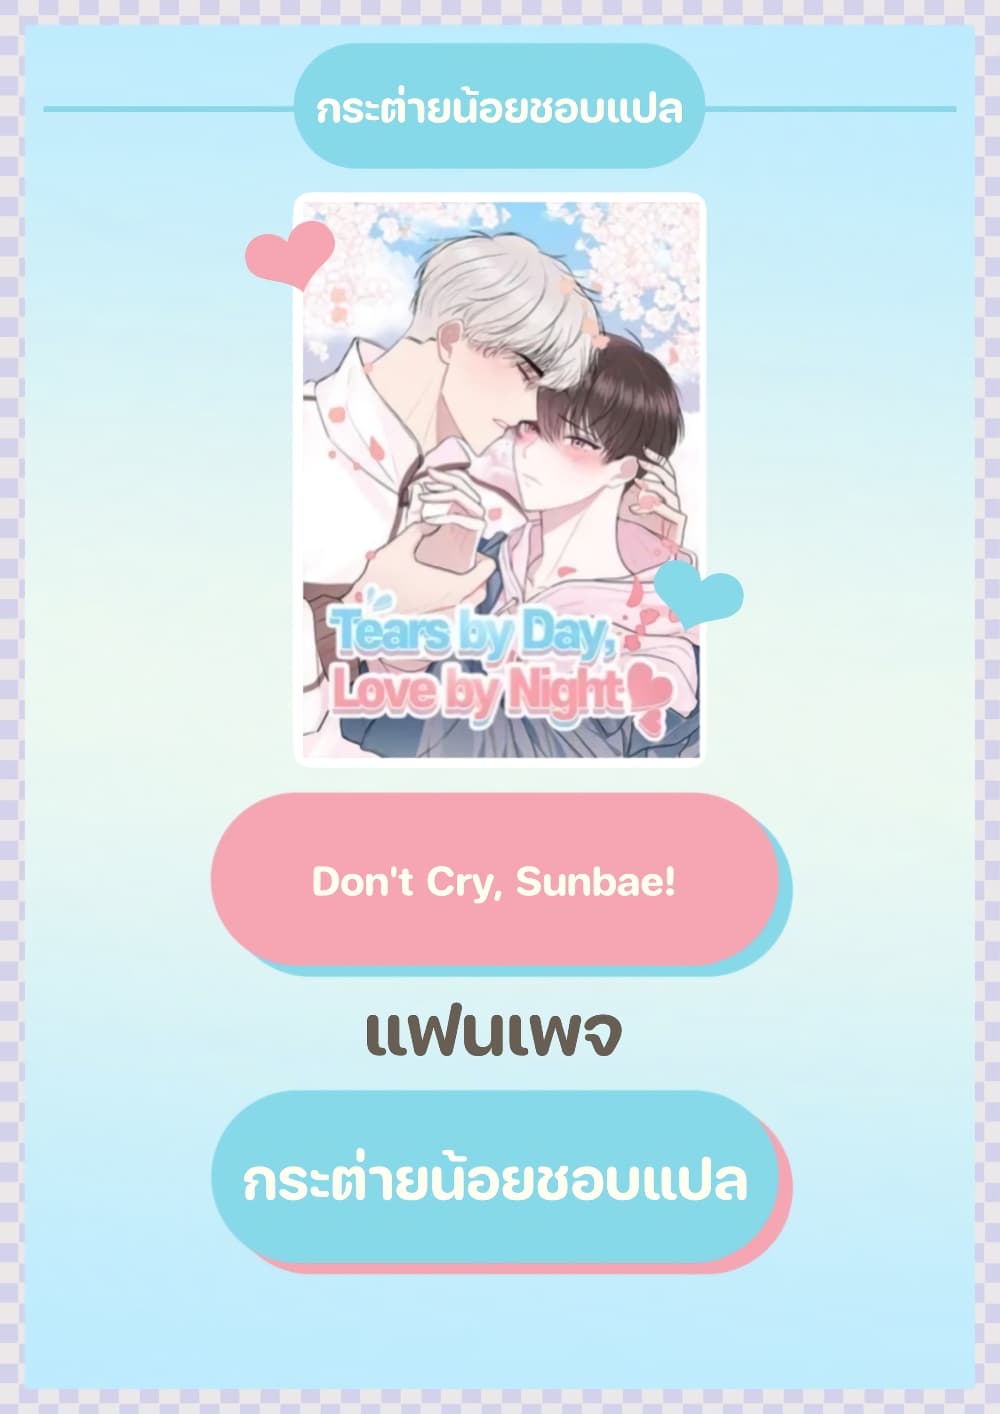 Donโ€t Cry, Sunbae! 9 (1)